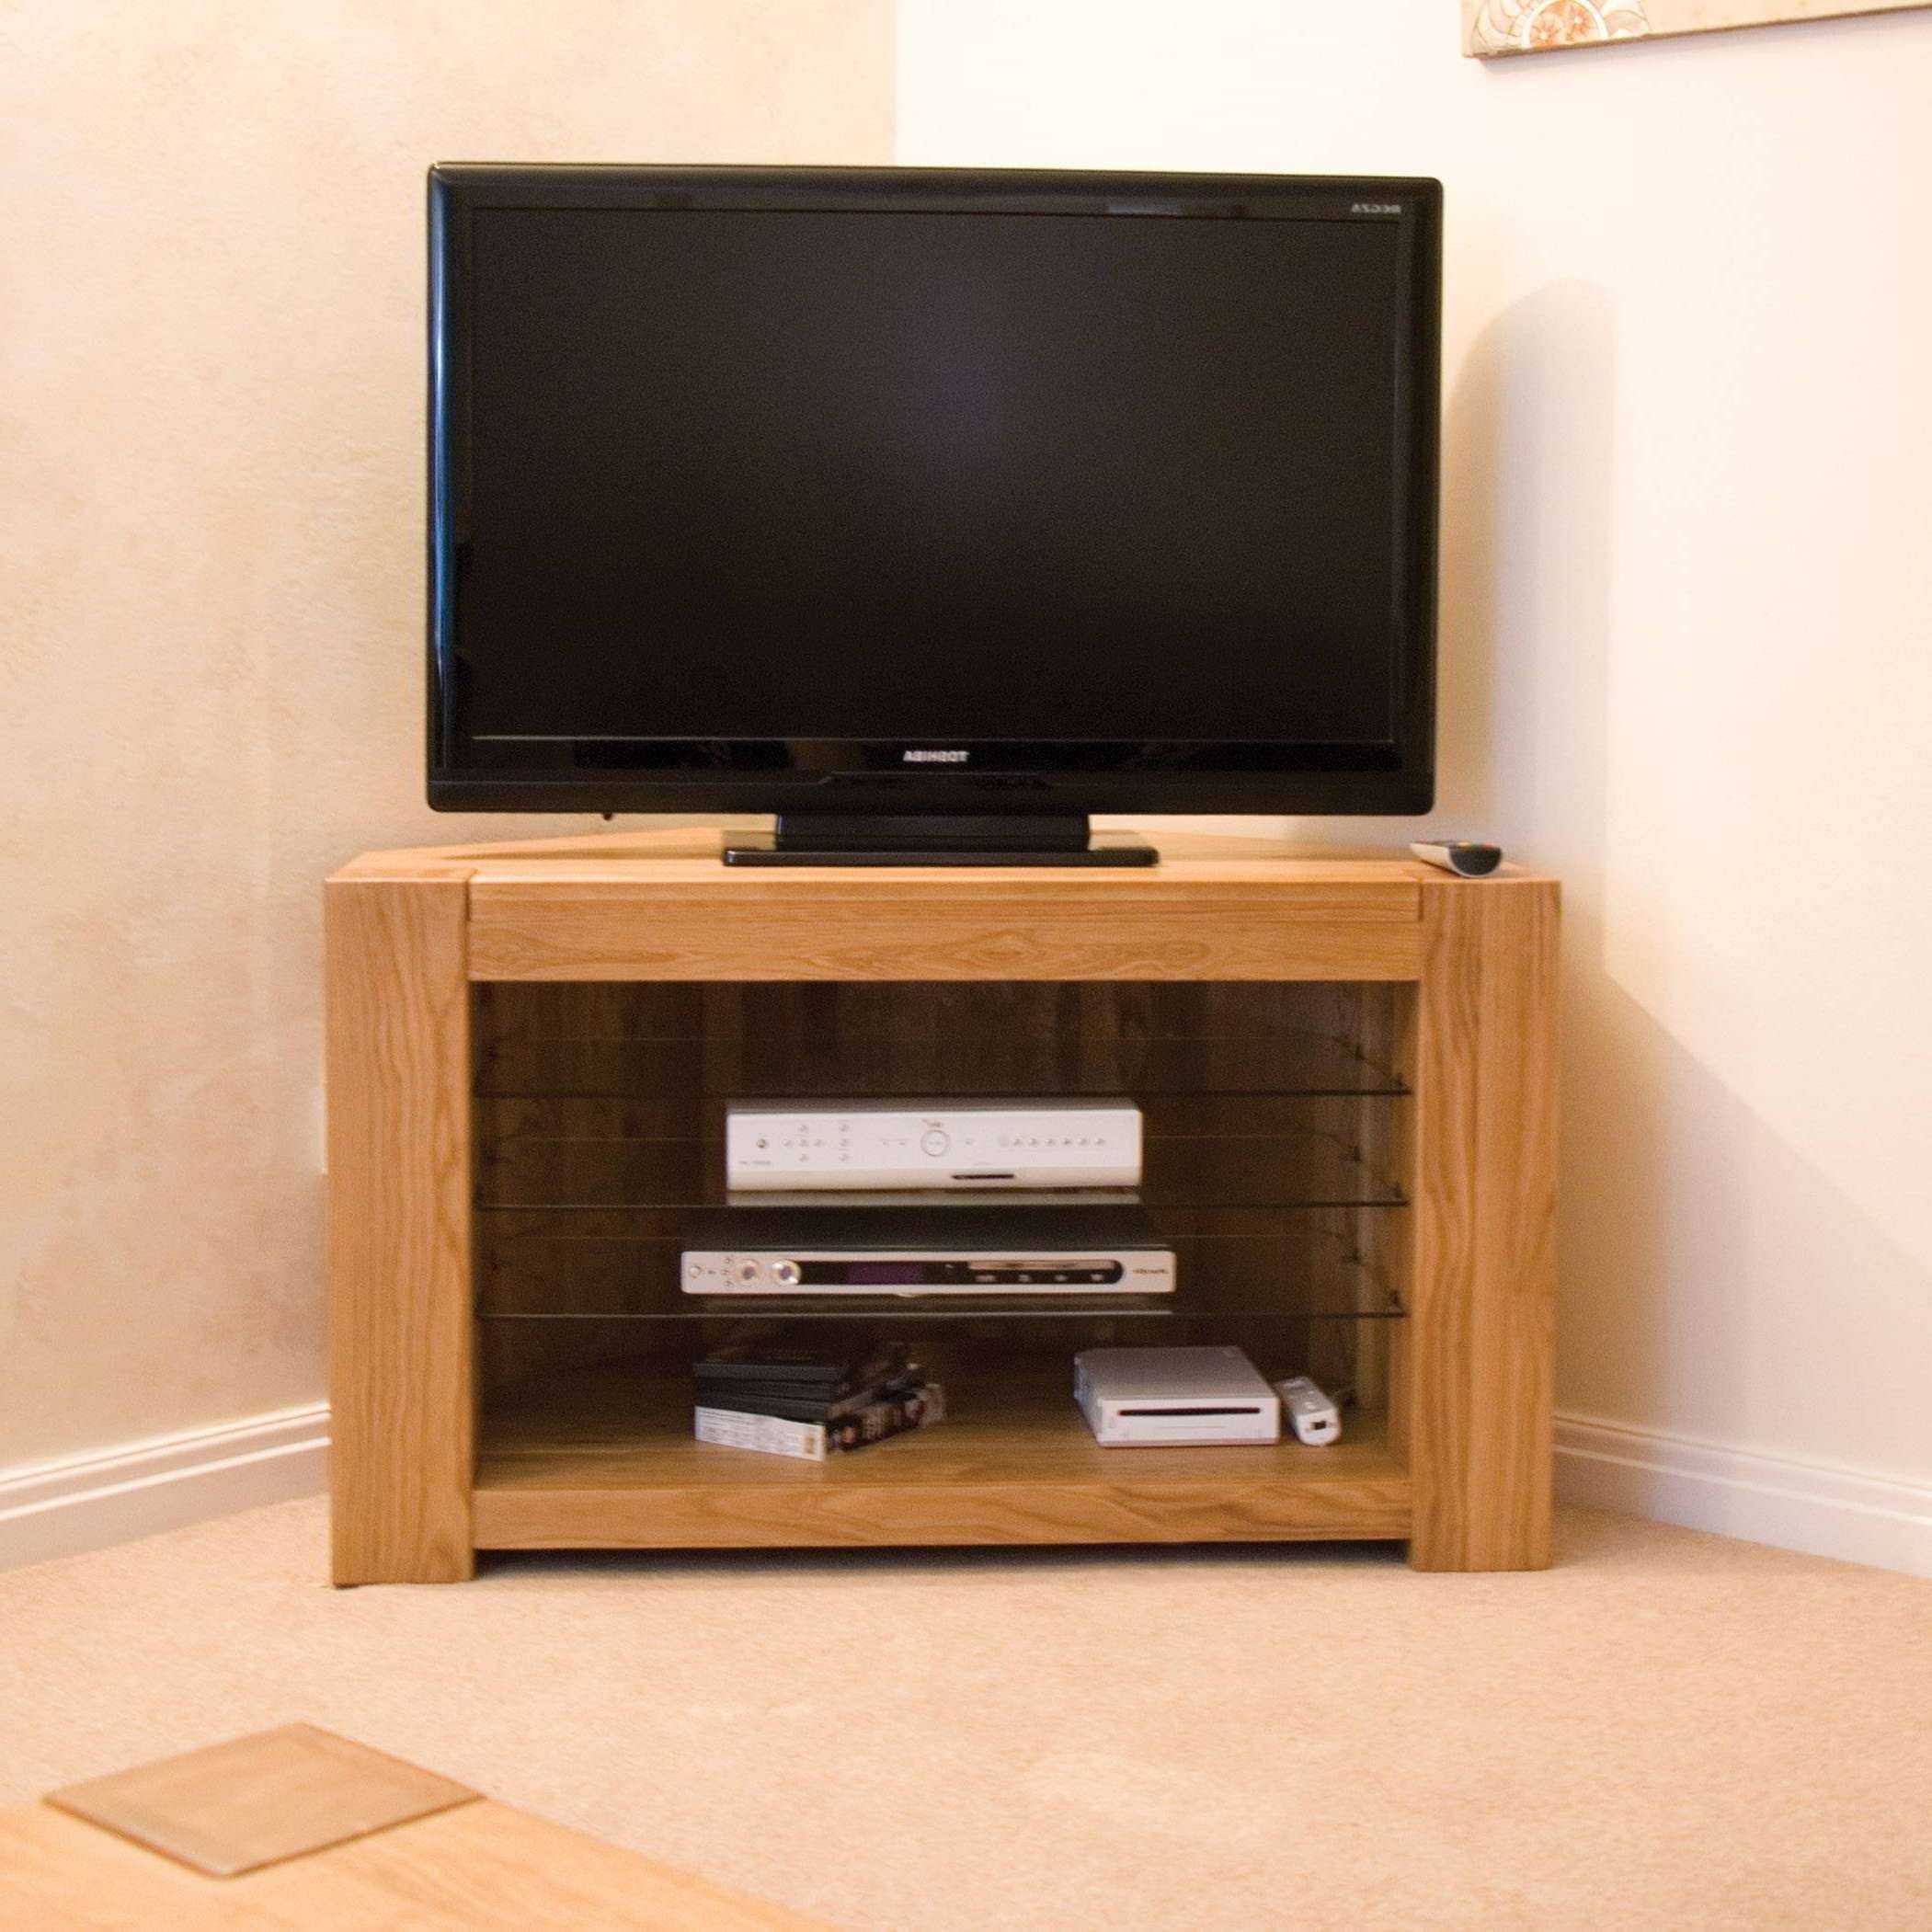 Padova Solid Oak Furniture Corner Television Cabinet Stand Unit | Ebay In Solid Oak Corner Tv Cabinets (View 14 of 20)